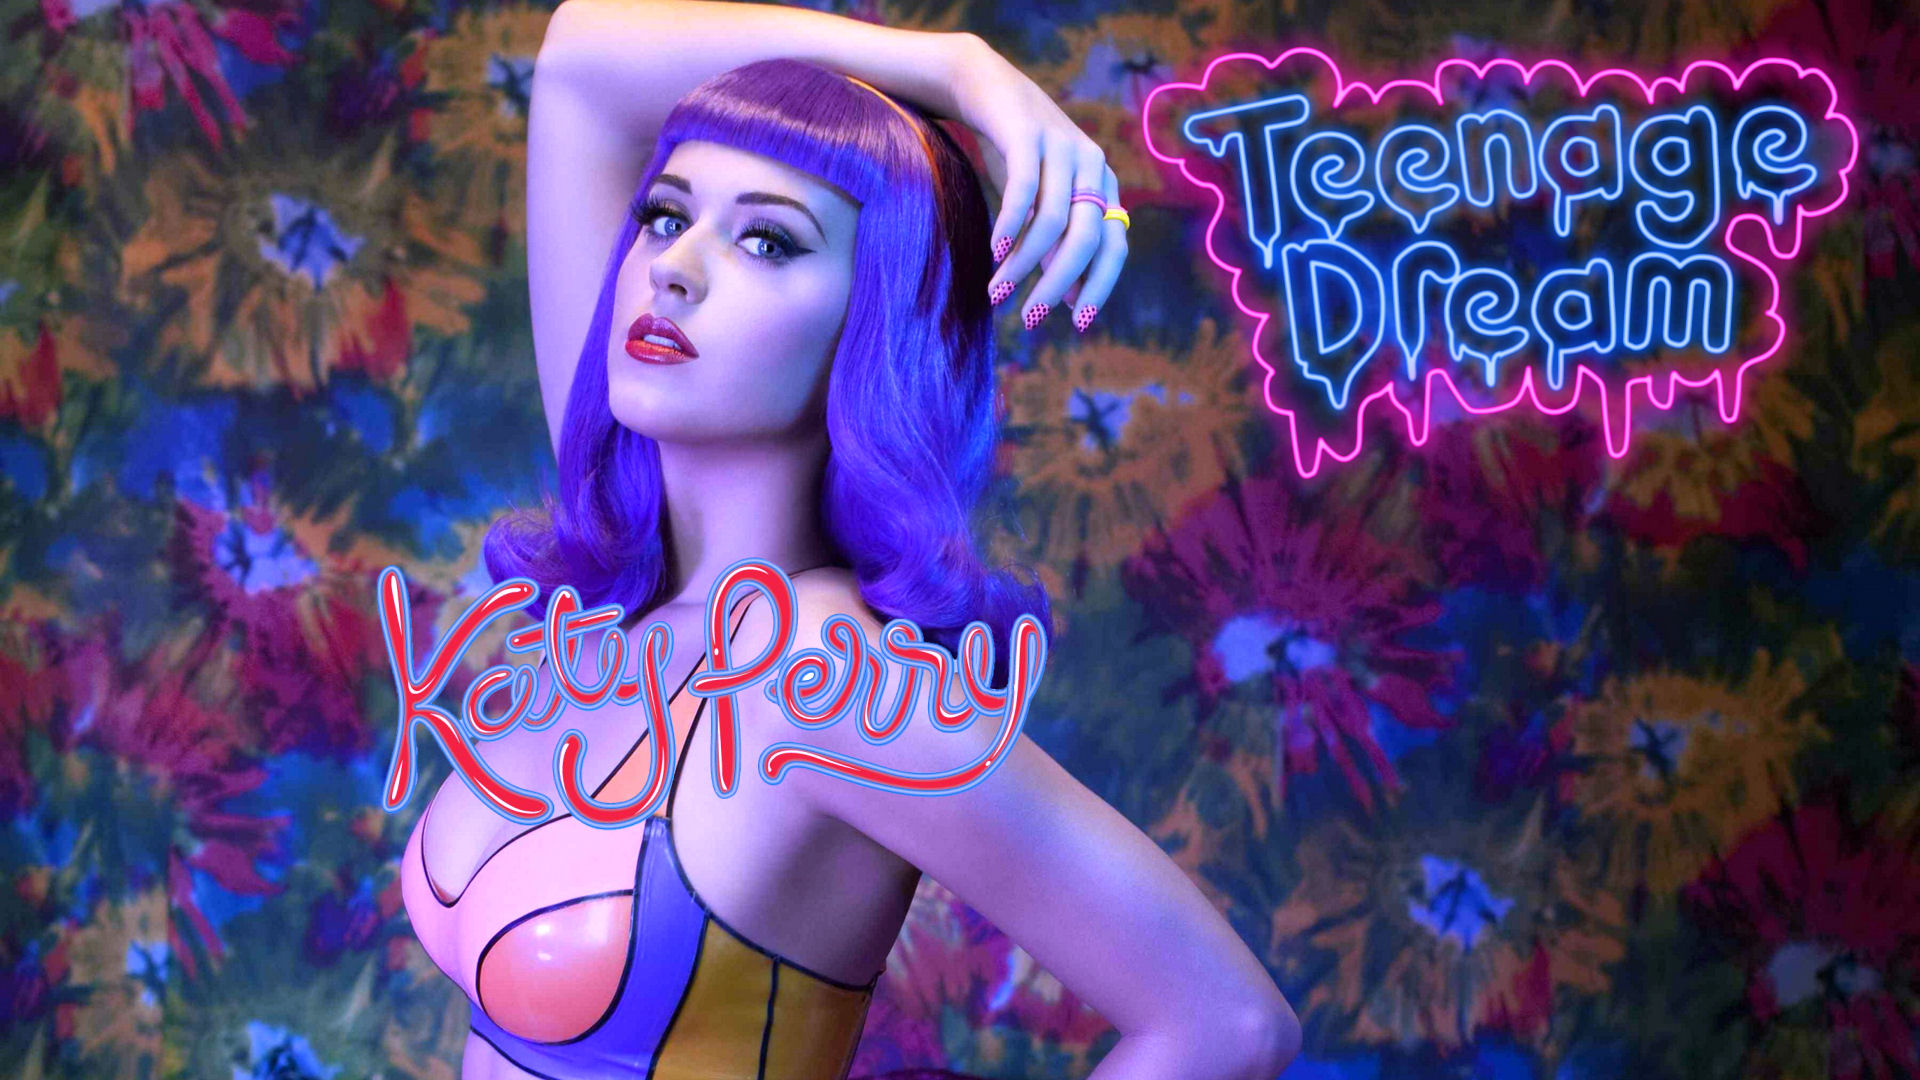 Katy Perry Teenage Dream - Katy Perry Wallpaper (37027121) - Fanpop